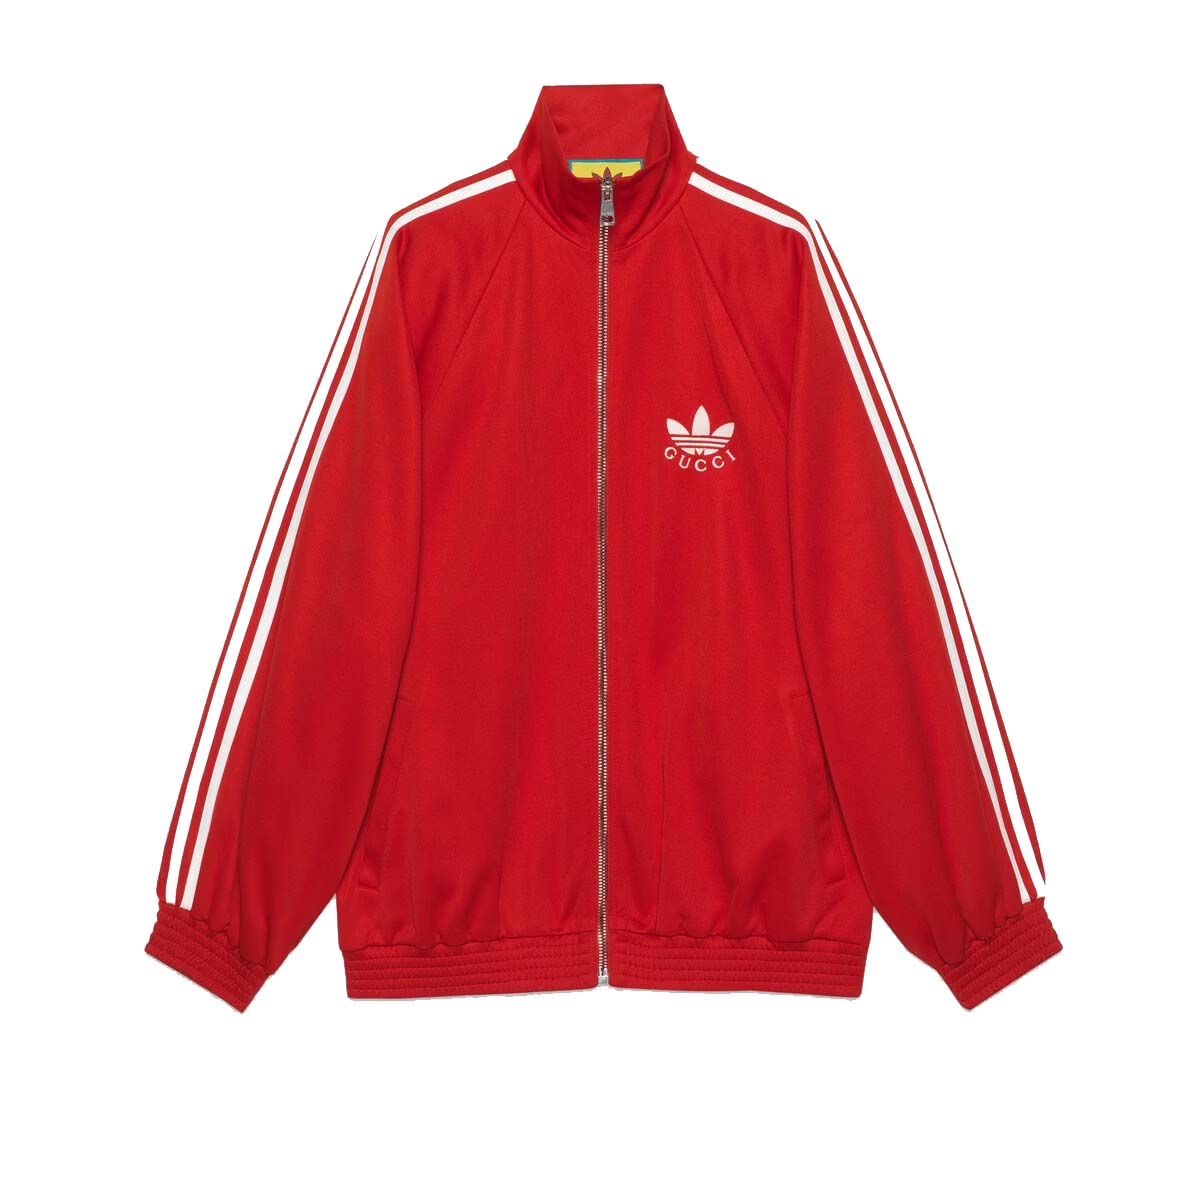 Gucci x adidas Cotton Jersey Zip Jacket Bright Red